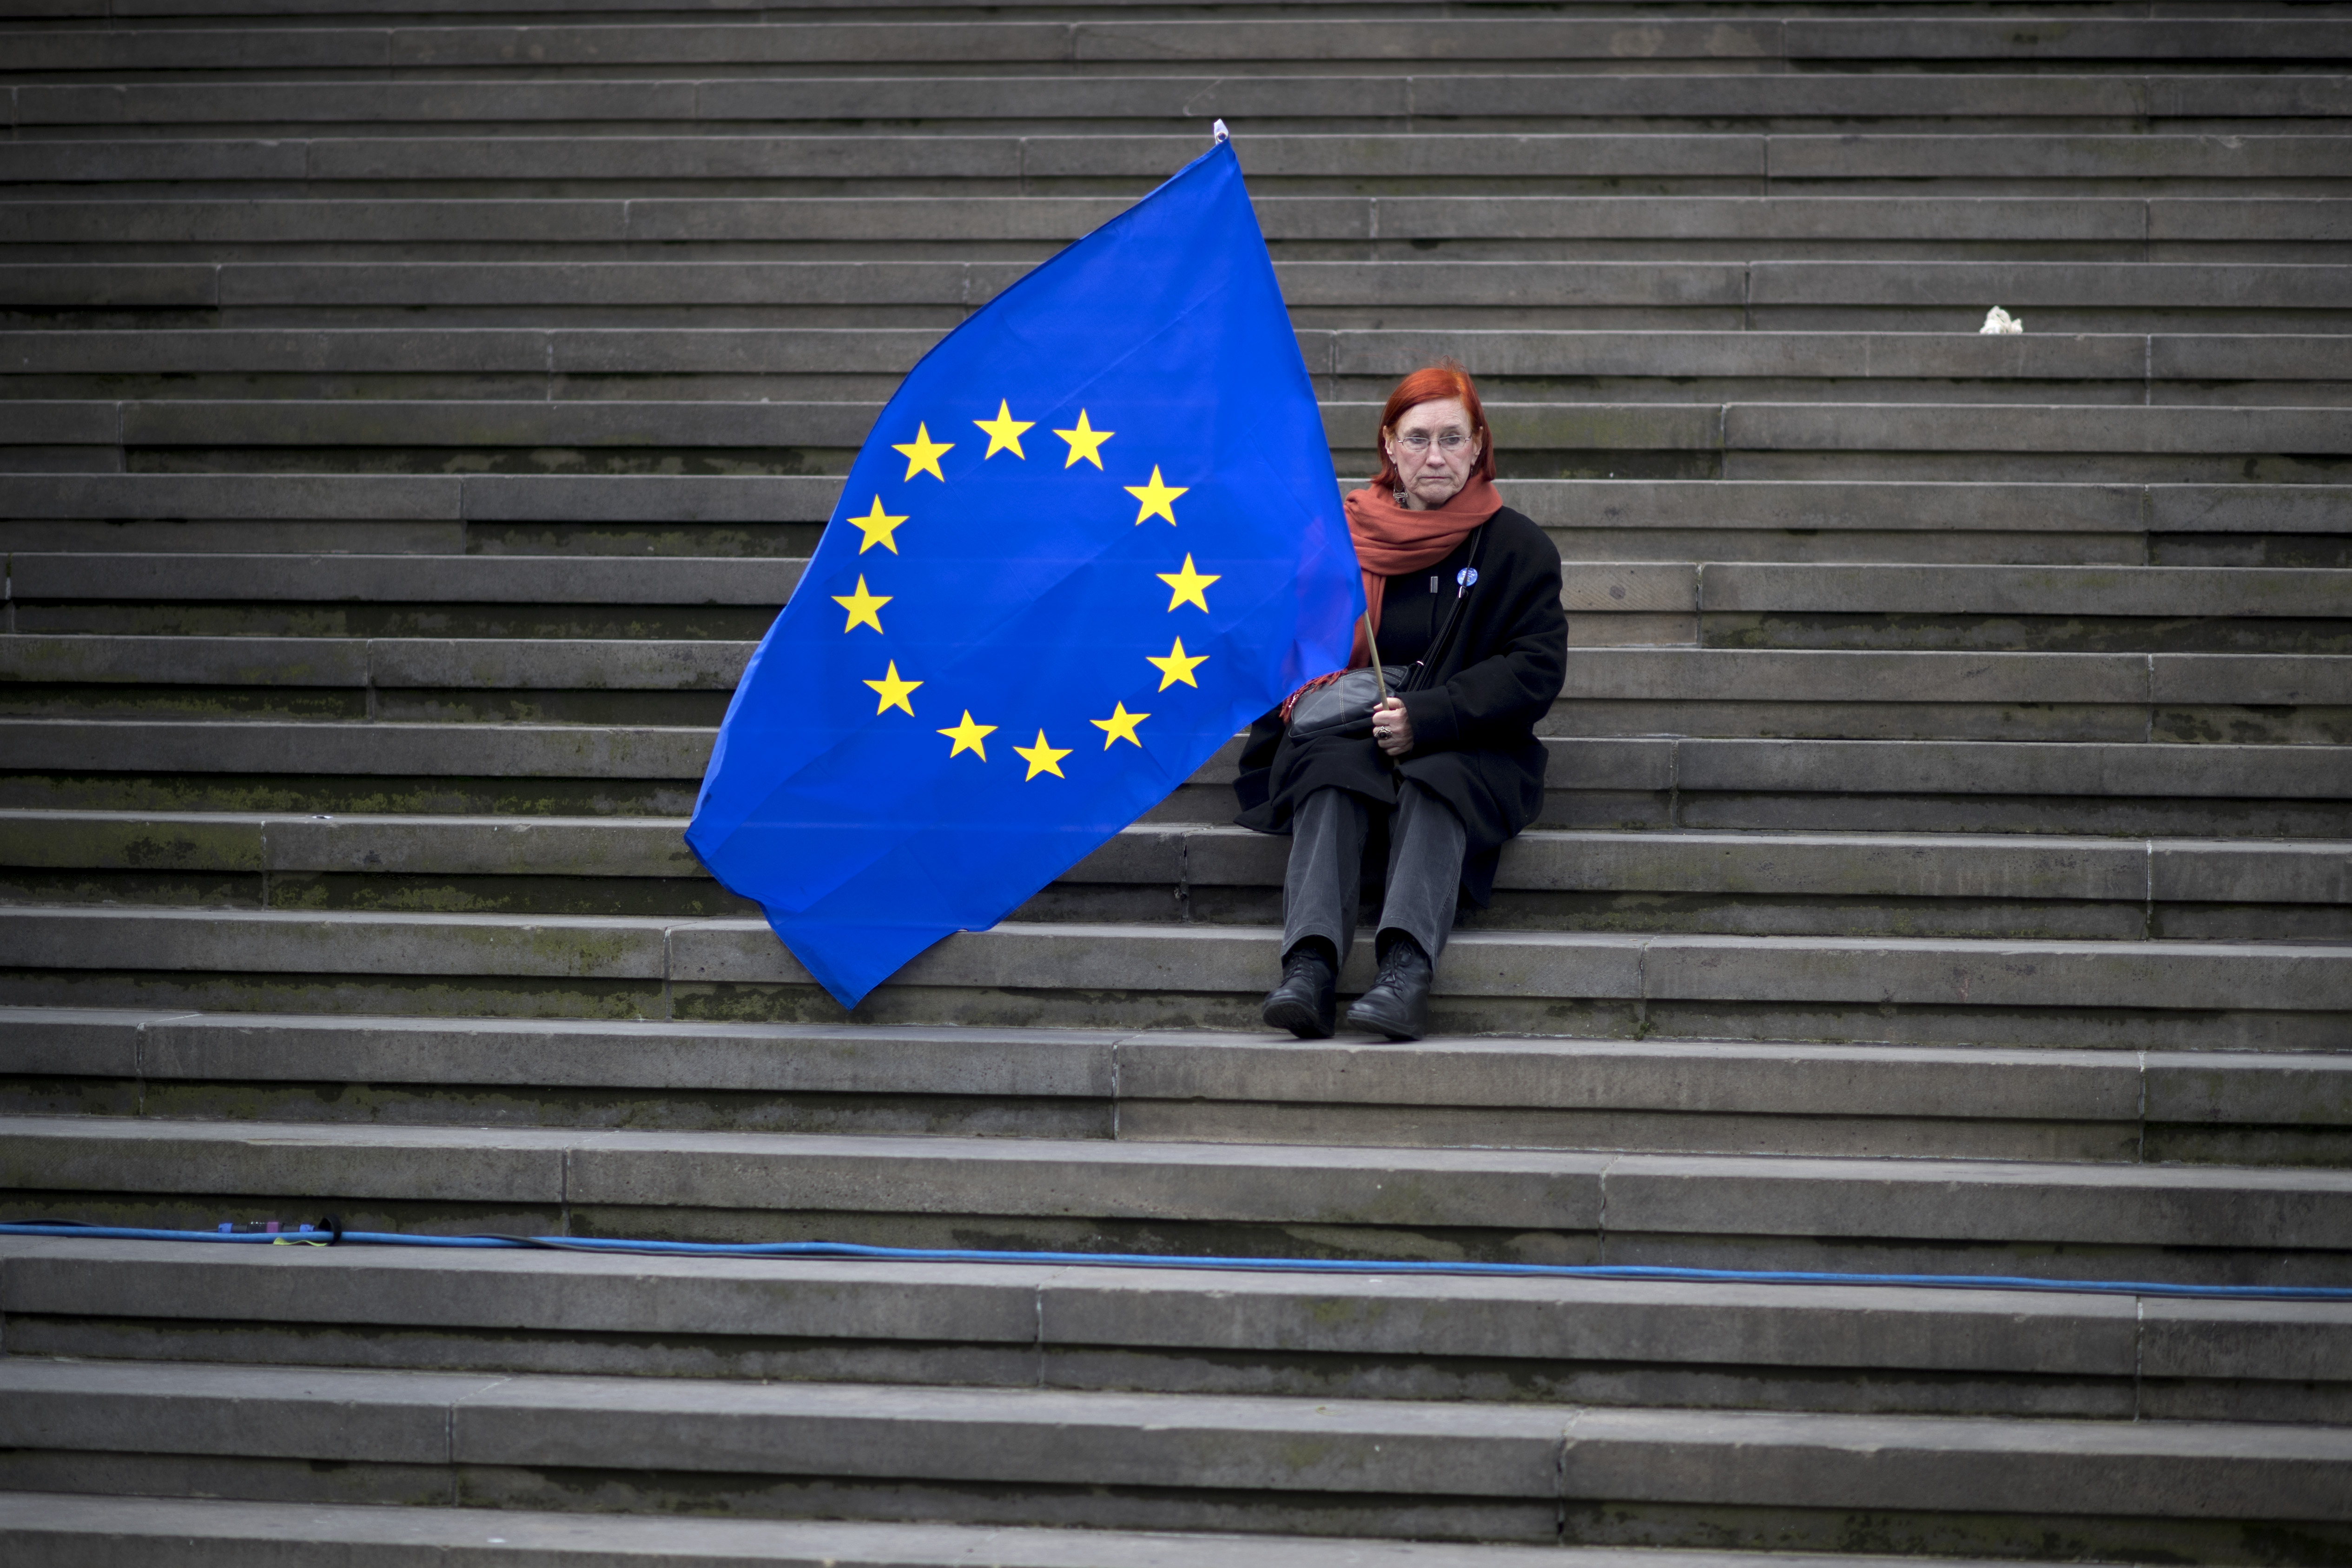 Demonstranten mit EU-Fahne auf der Kundgebung Pulse of Europe. Foto: © Stefan Boness / Visum / picturedesk.com